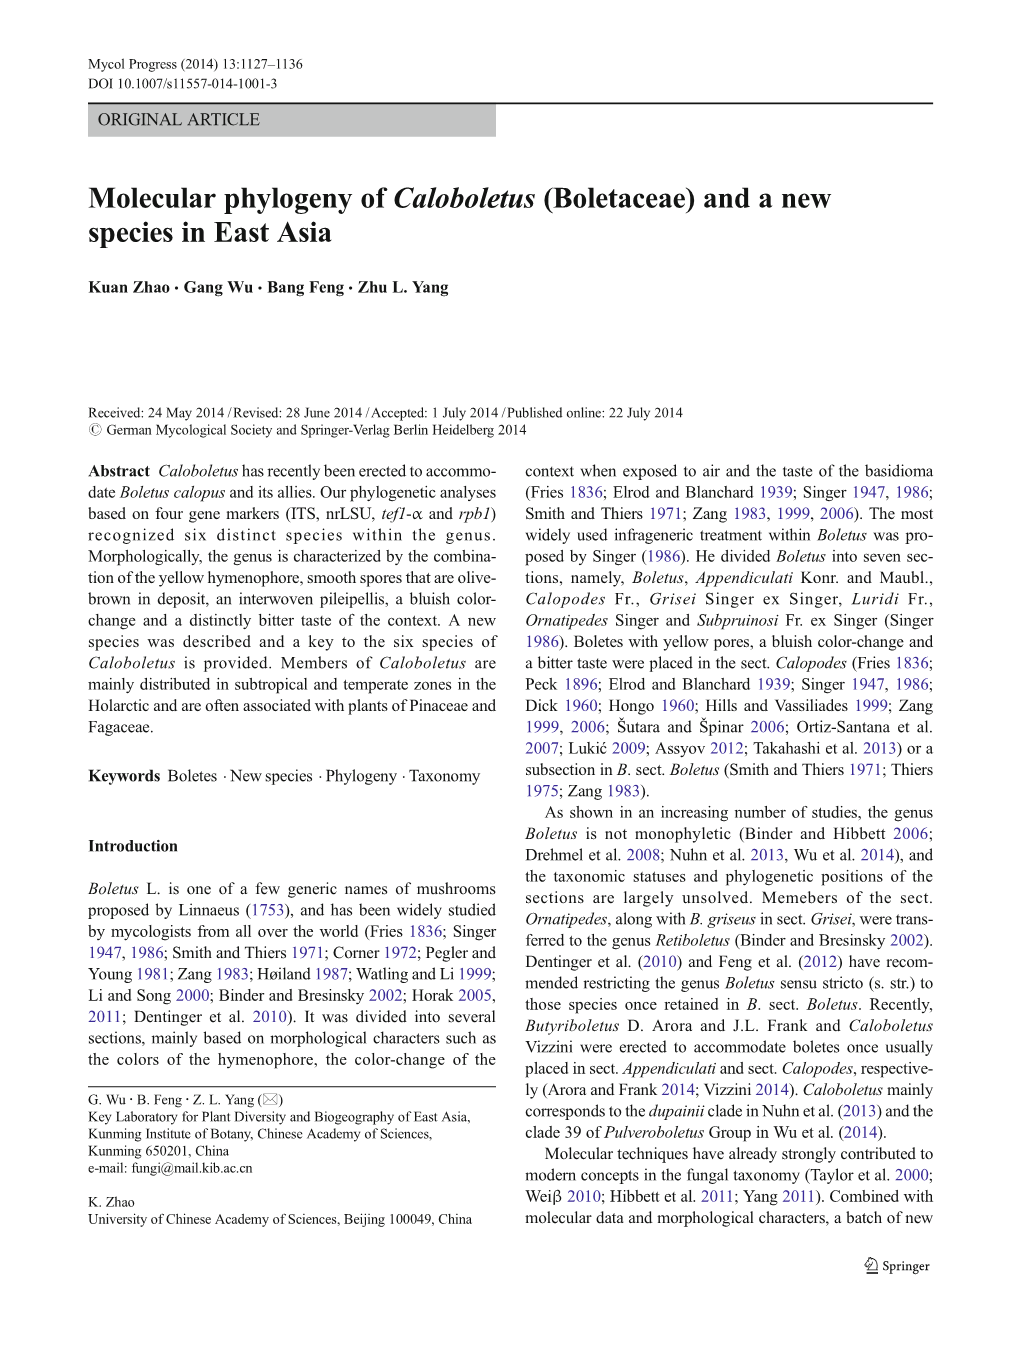 Molecular Phylogeny of Caloboletus (Boletaceae) and a New Species in East Asia